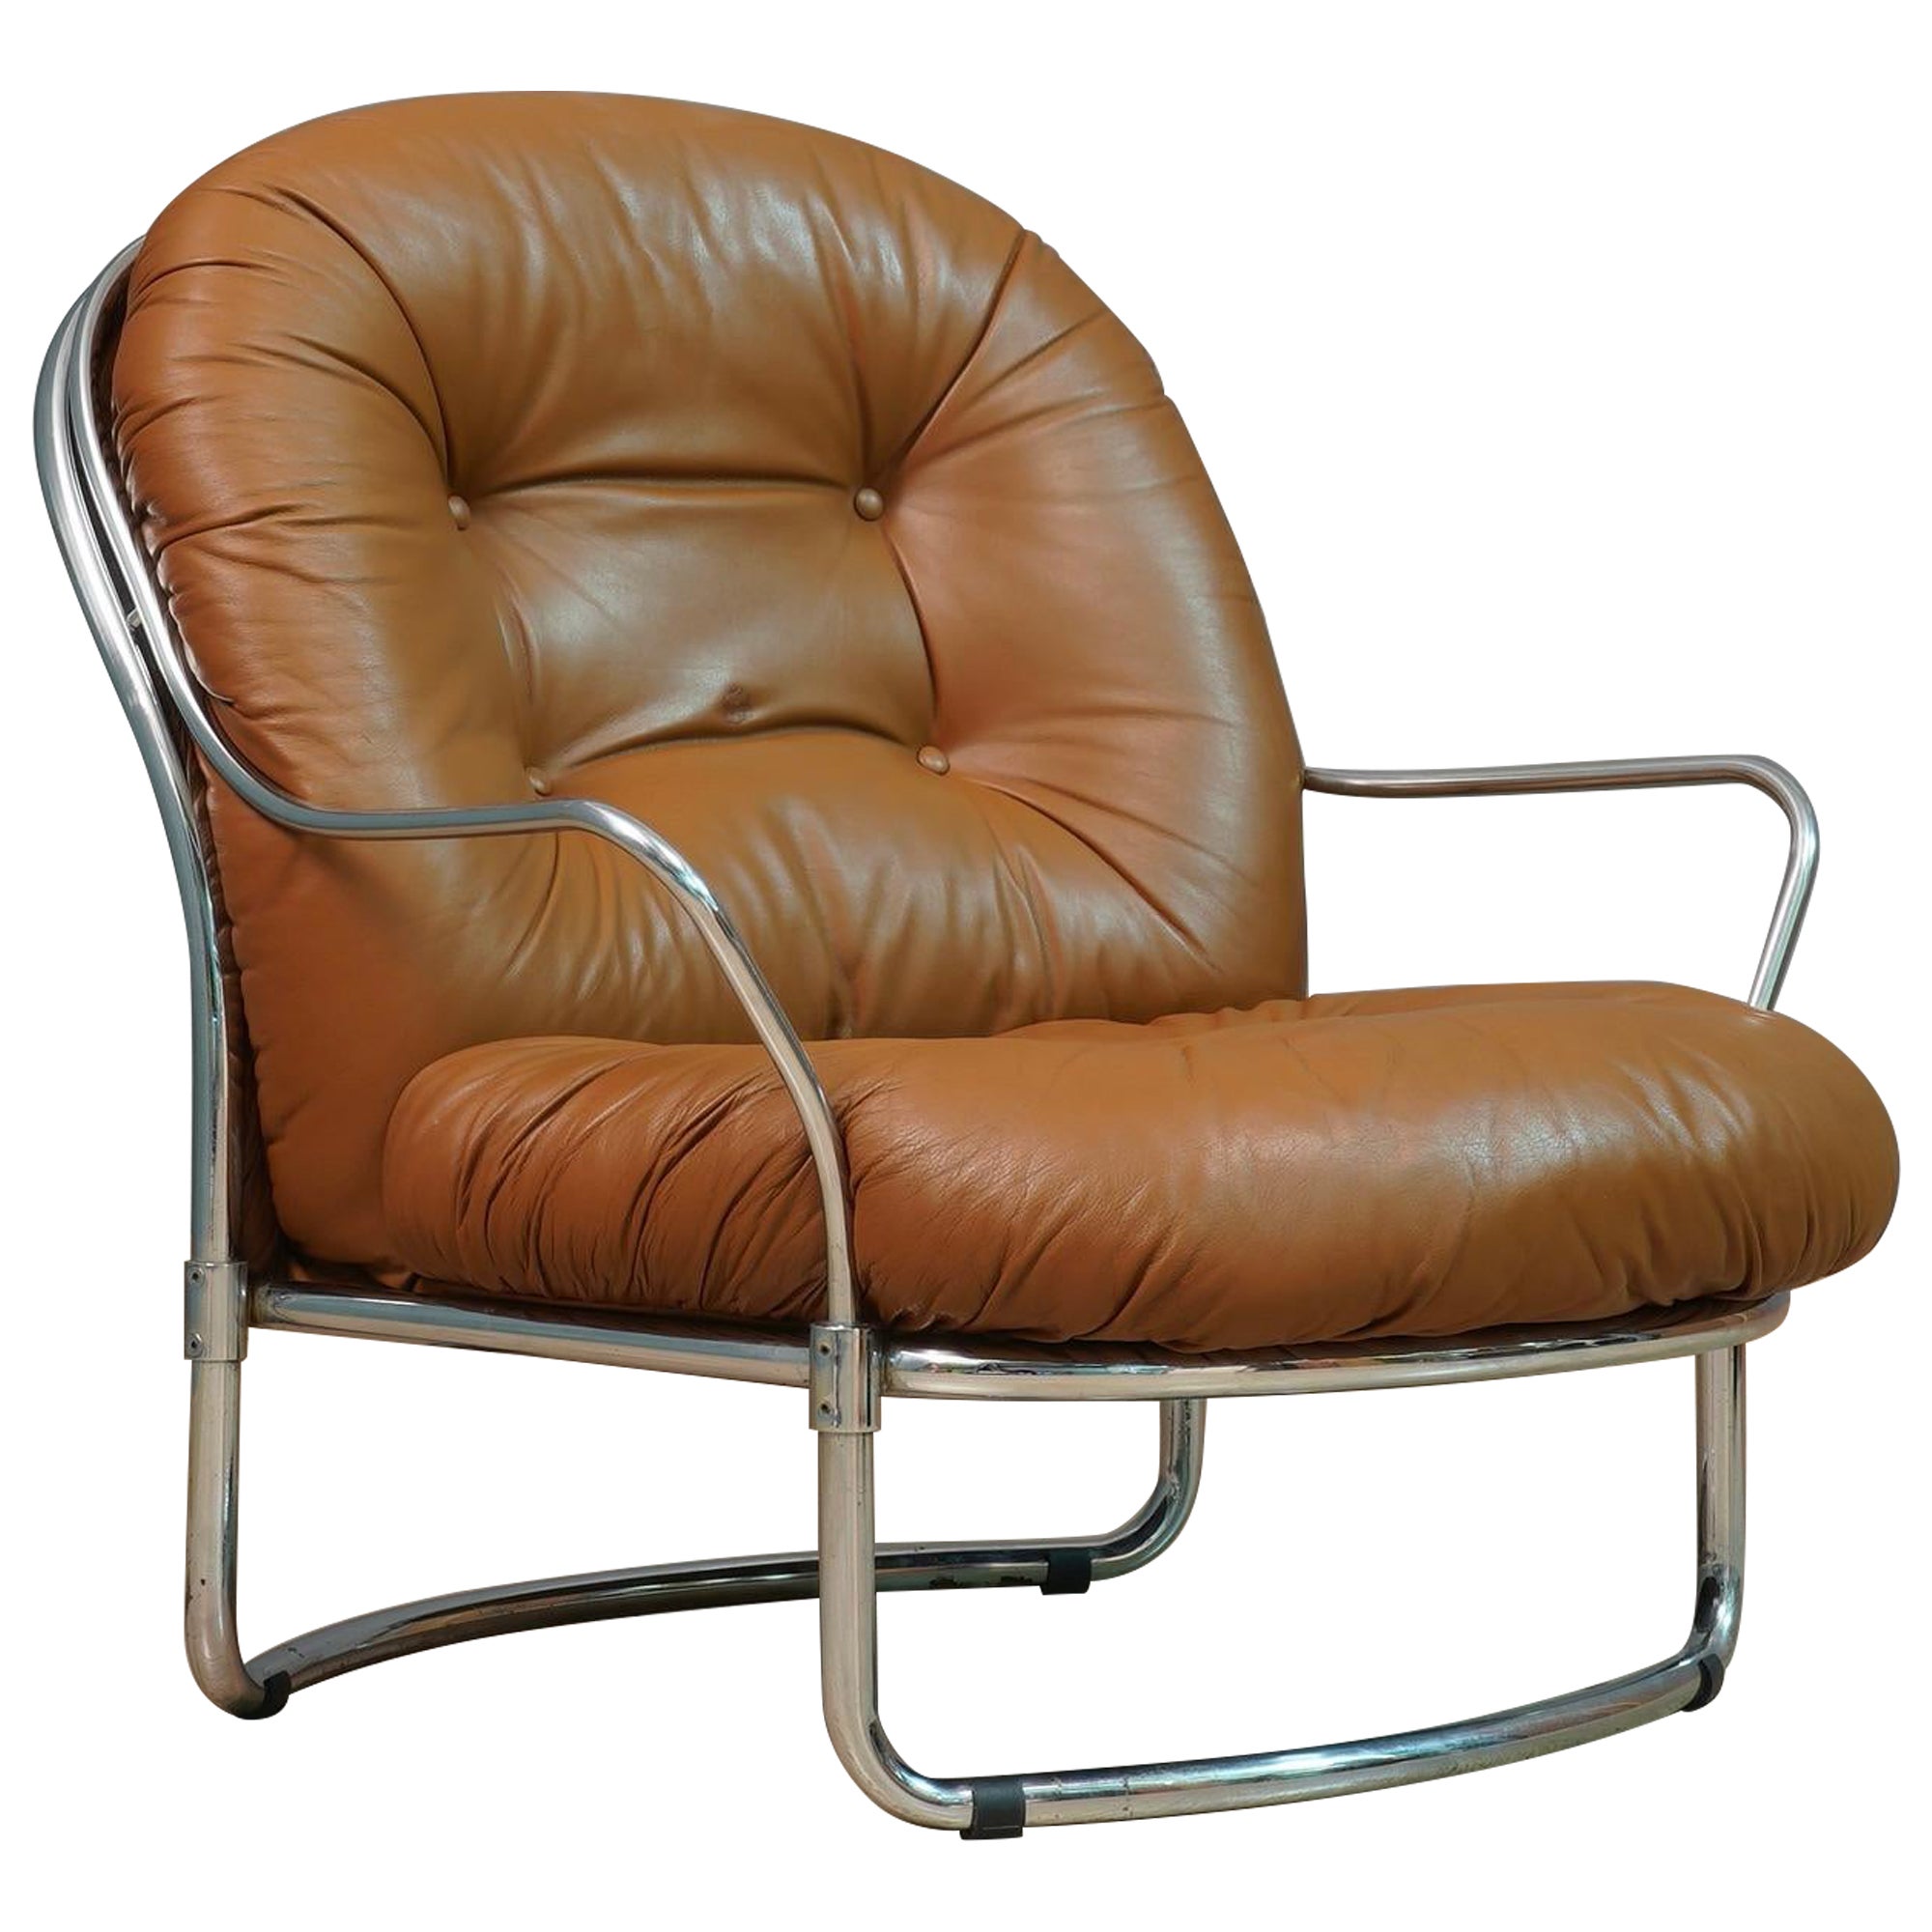 Carlo De Carli for Cinova Mod. 915 Chrome and Brown Leather Arm Chair, 1969